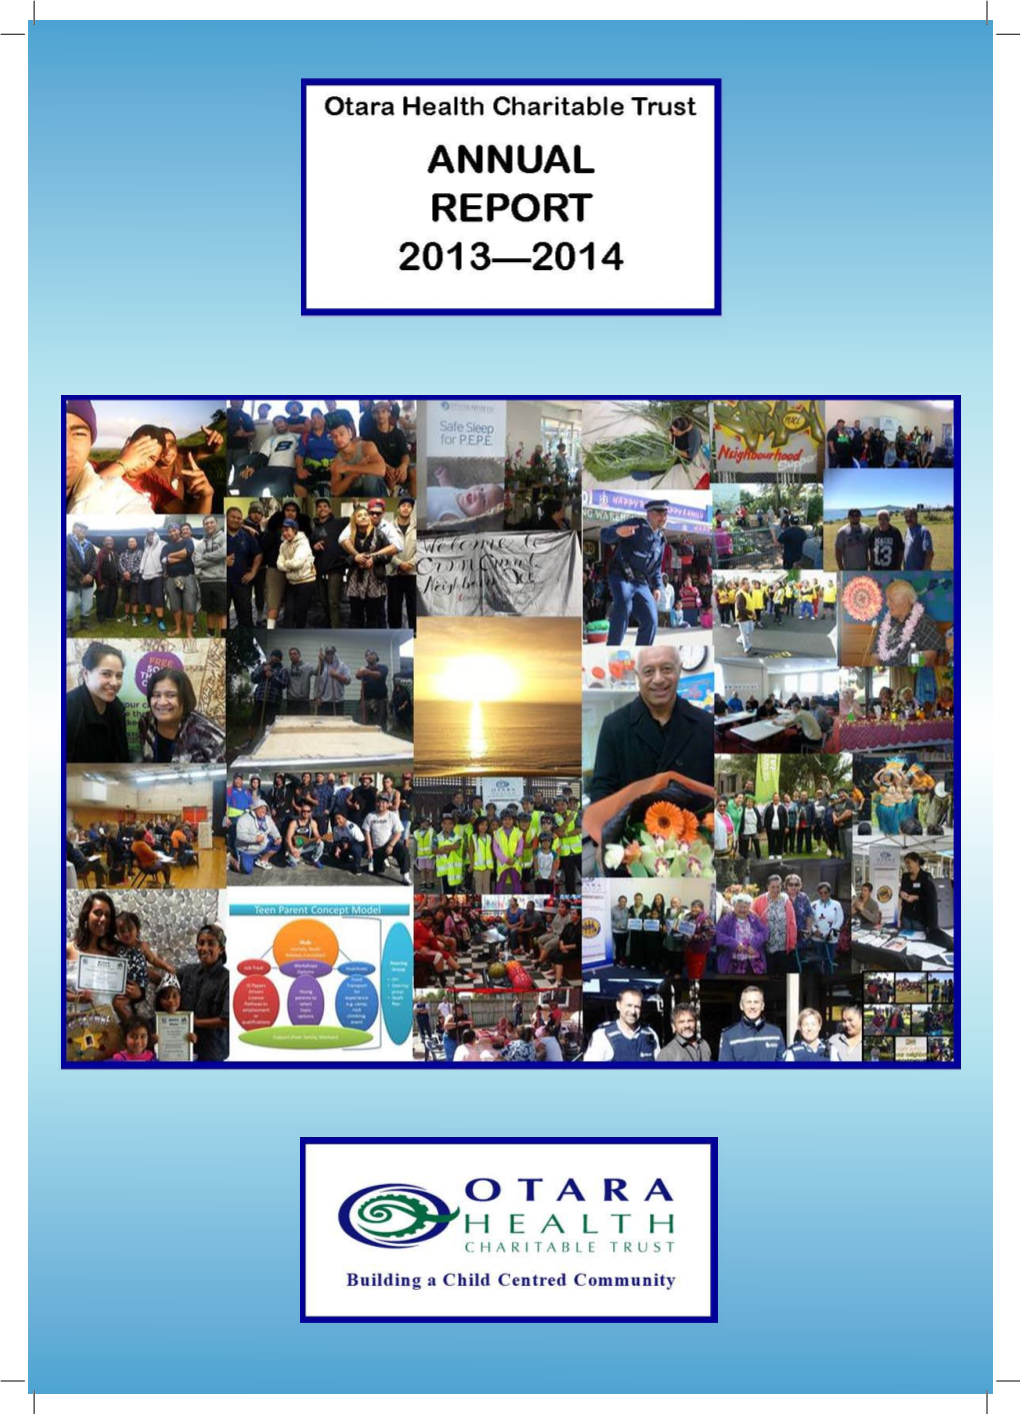 Otara Health Annual Report 2013-2014